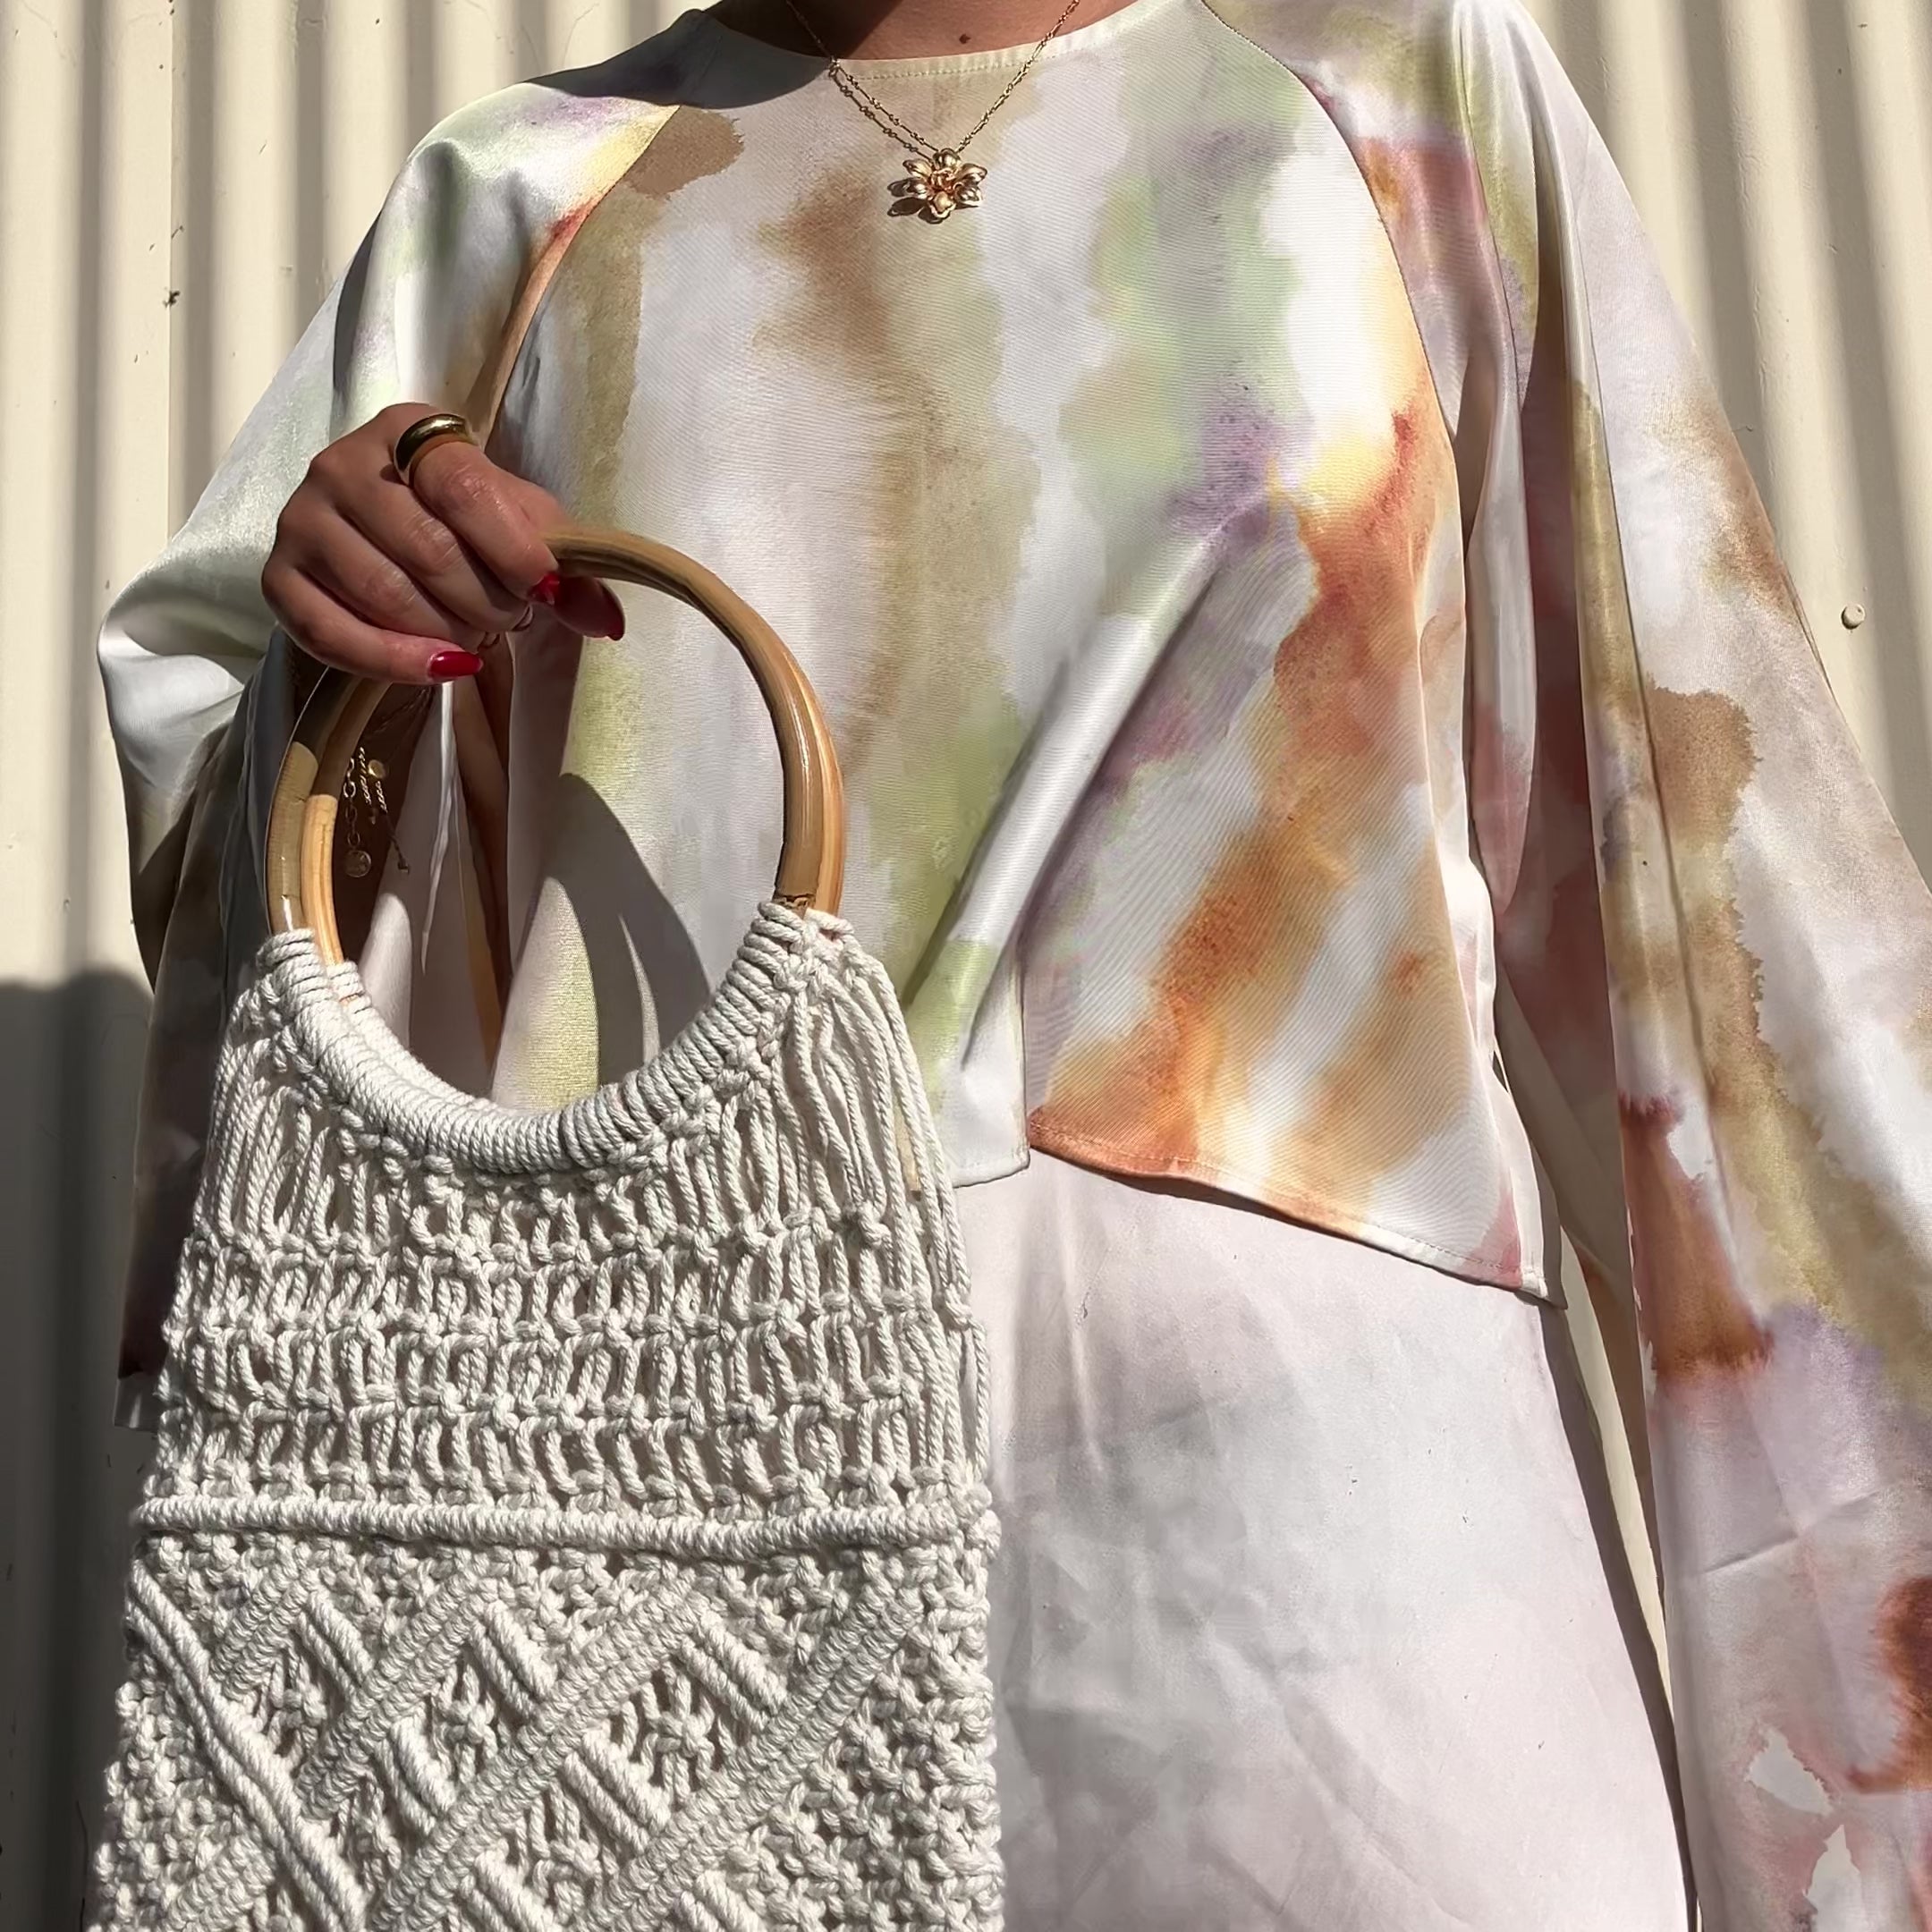 Video of model wearing beige macrame crochet bag with handles